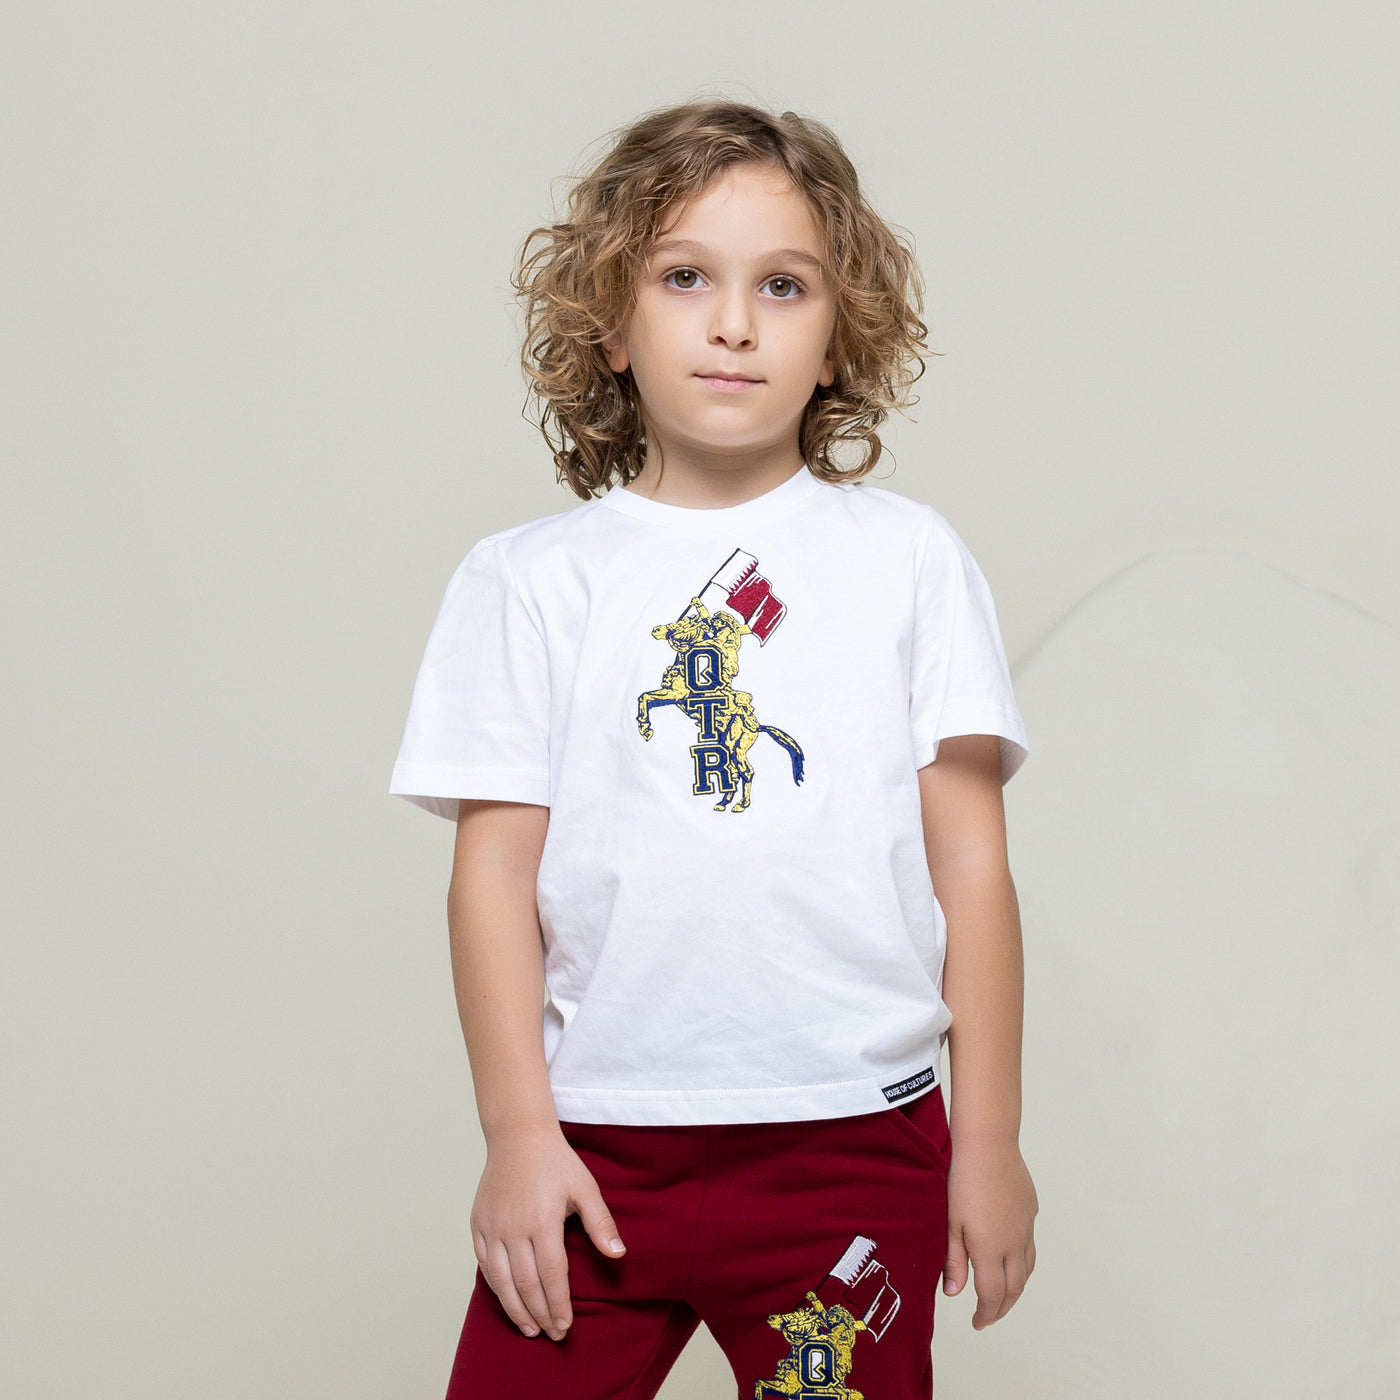 Qatari knight T-shirt